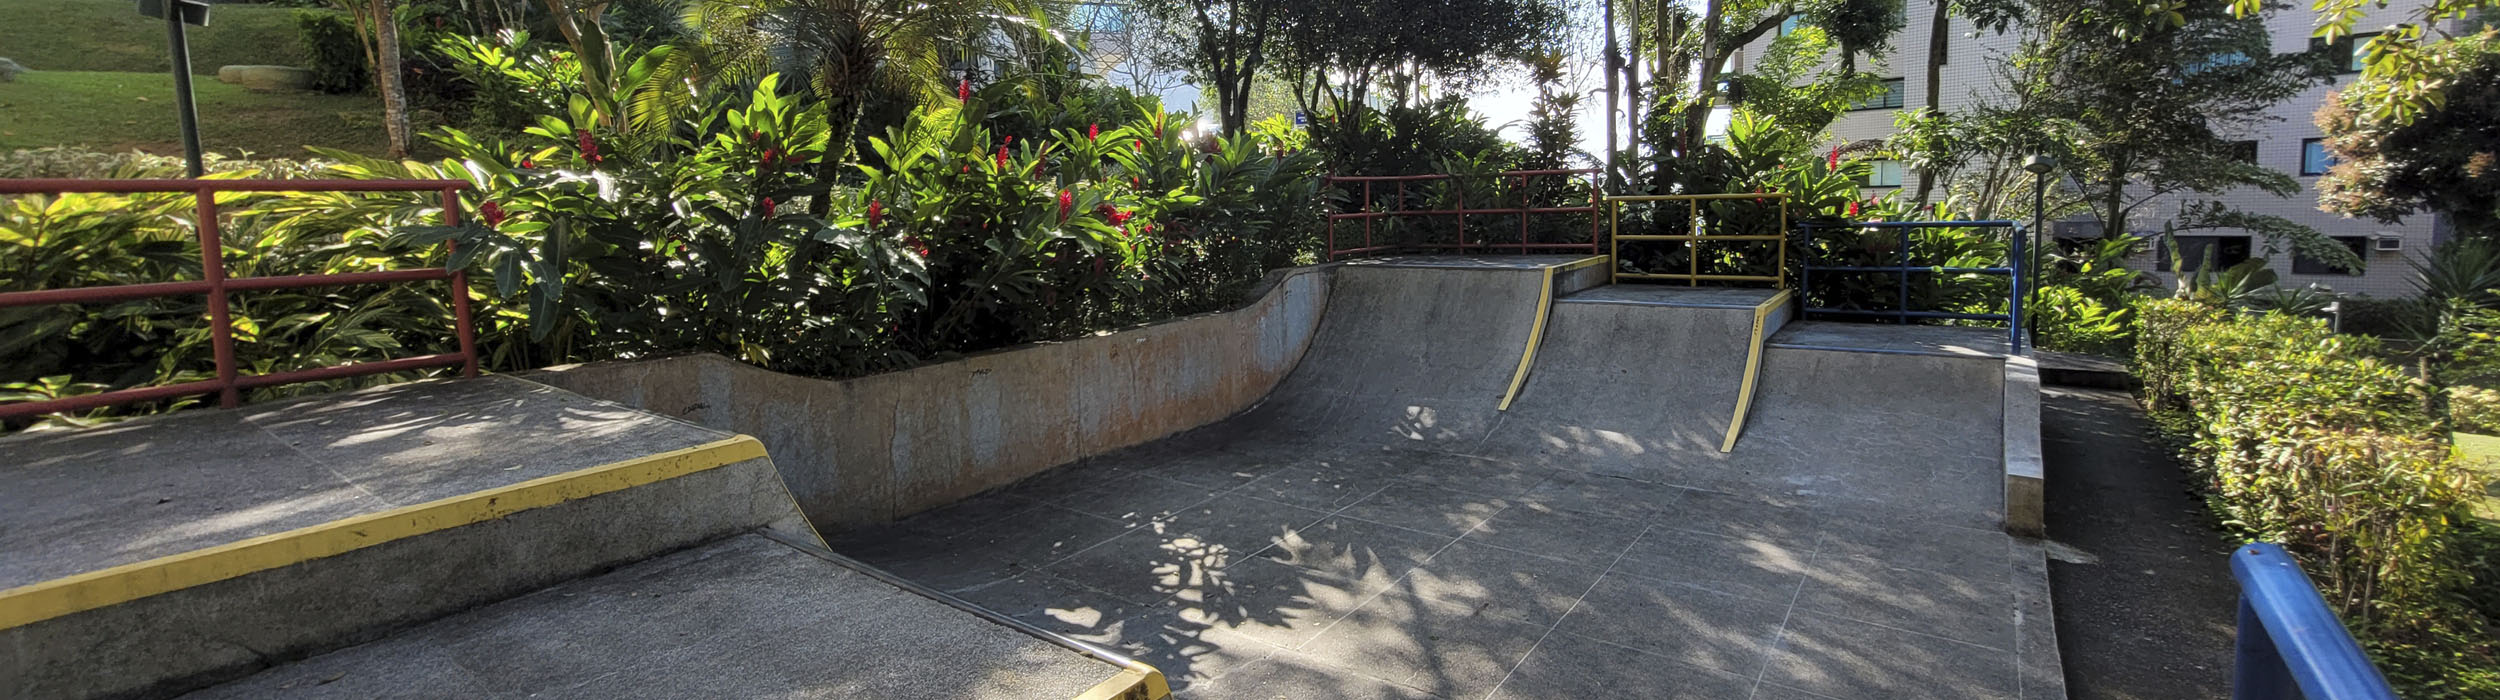 Pista de Skate - Condomínio Porto Real Resort